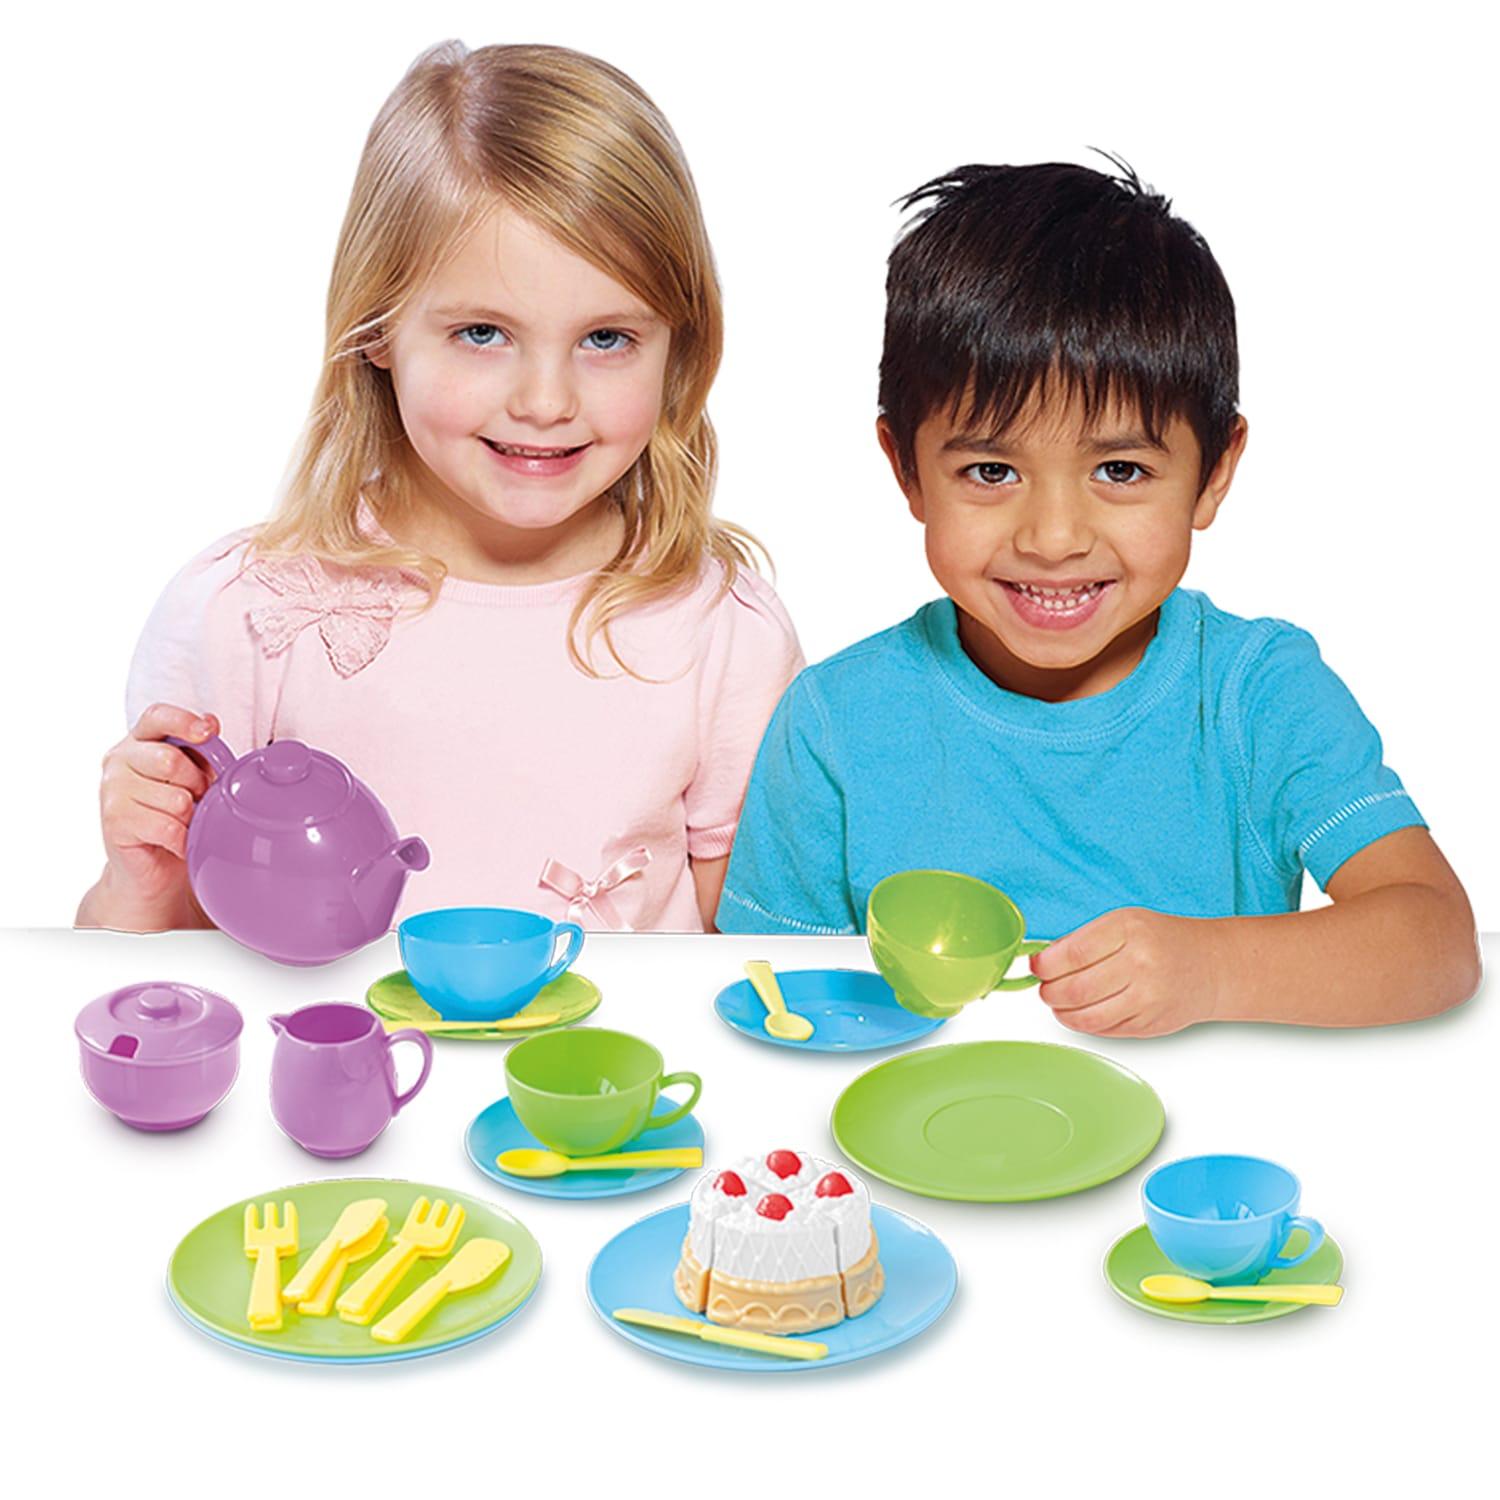 CASDON 32 Piece Tea Set Toy Kids Play Kitchen Plates Cup Children Playset Gift 